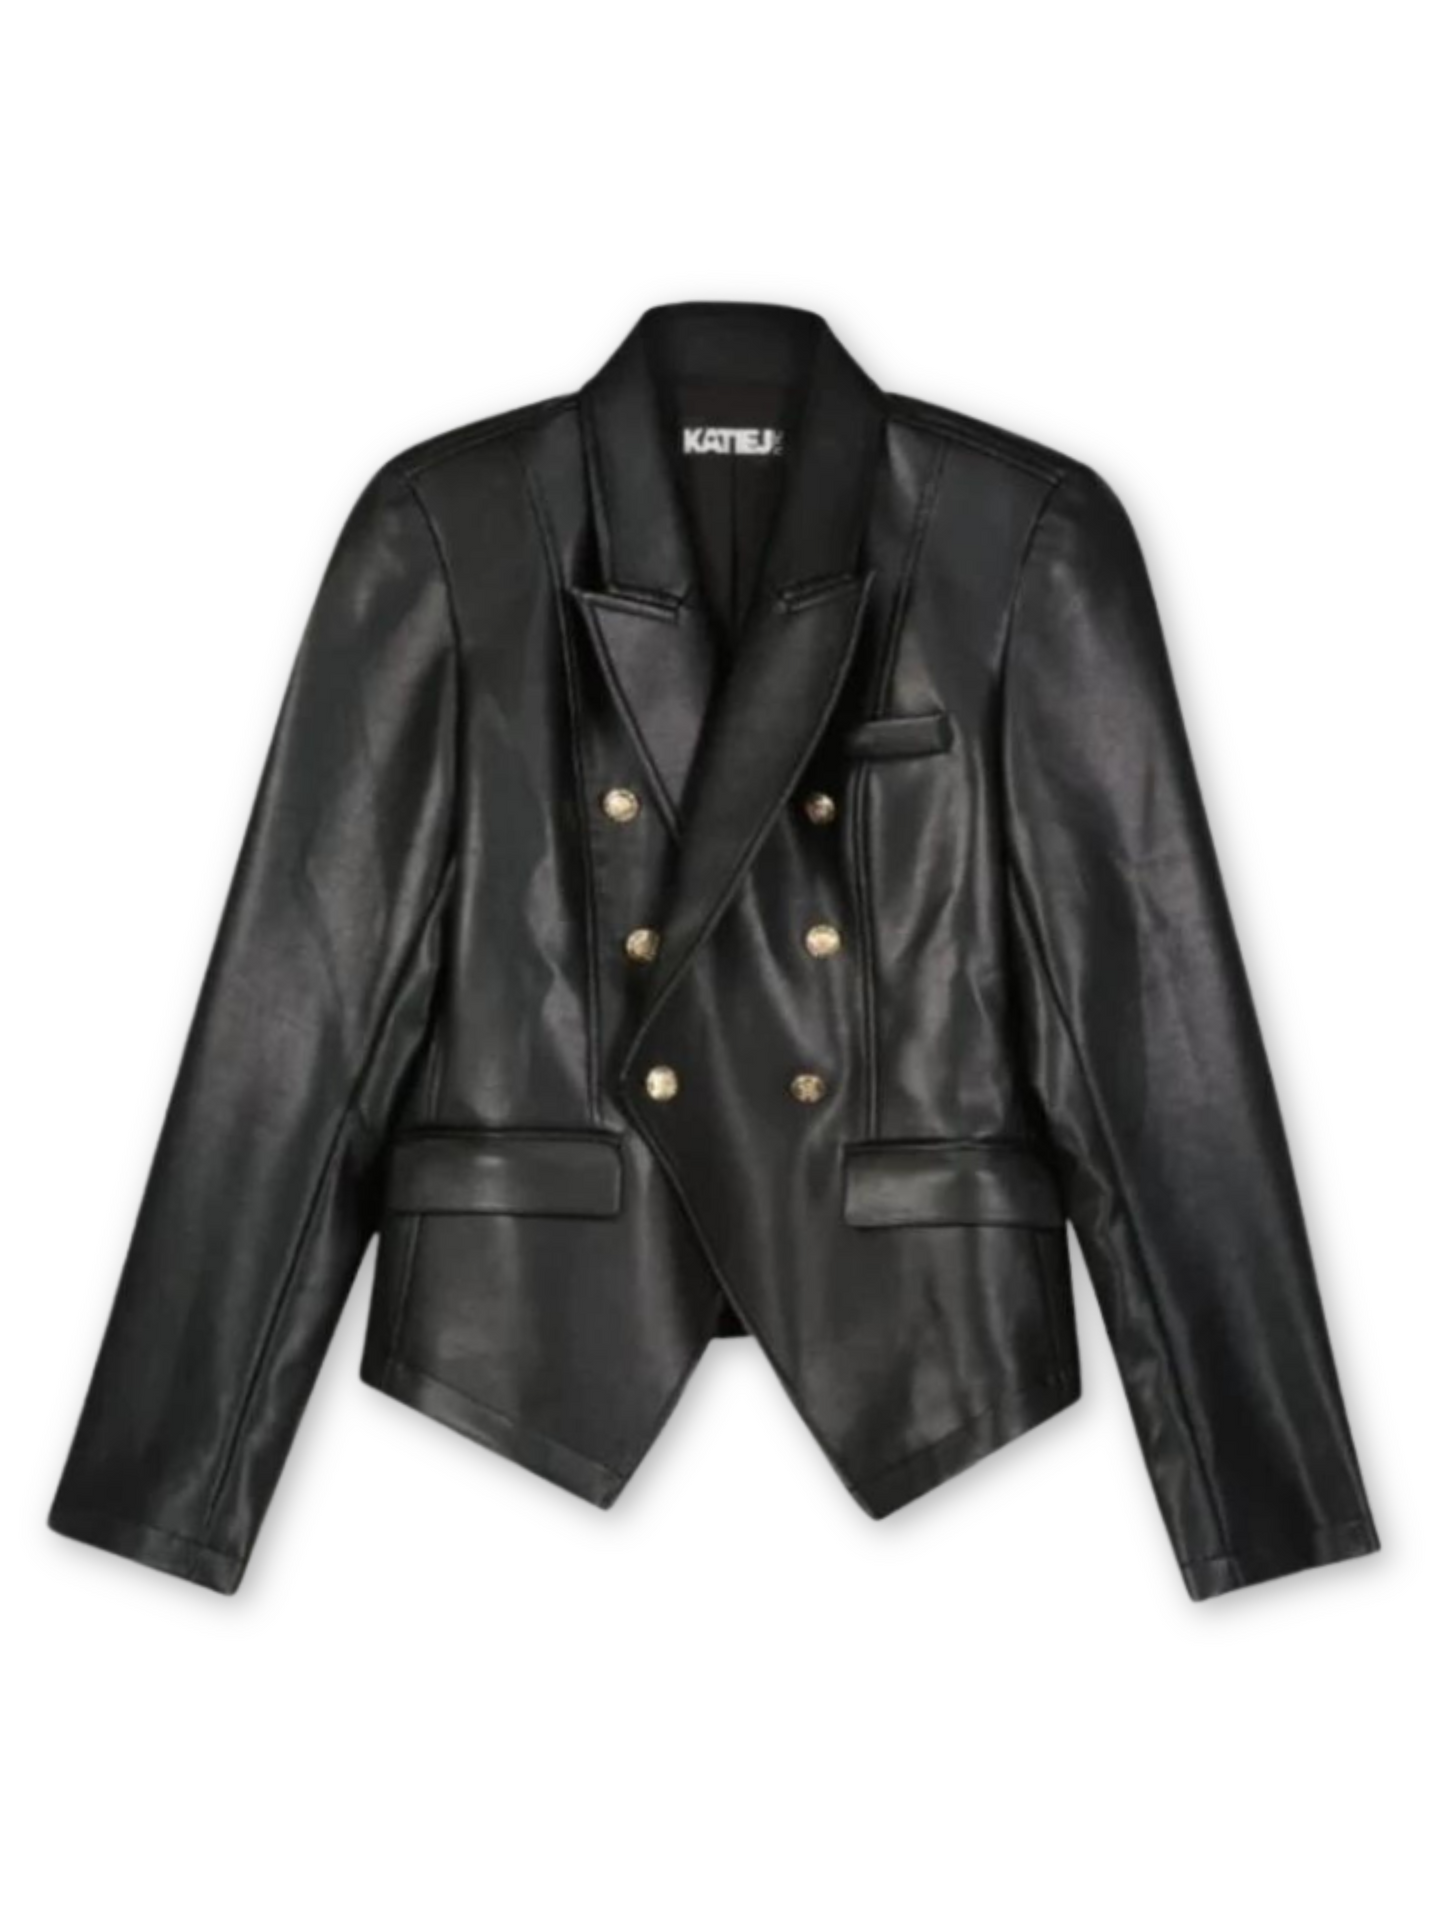 KatieJ Black Victoria Leather Jacket _89605-3110